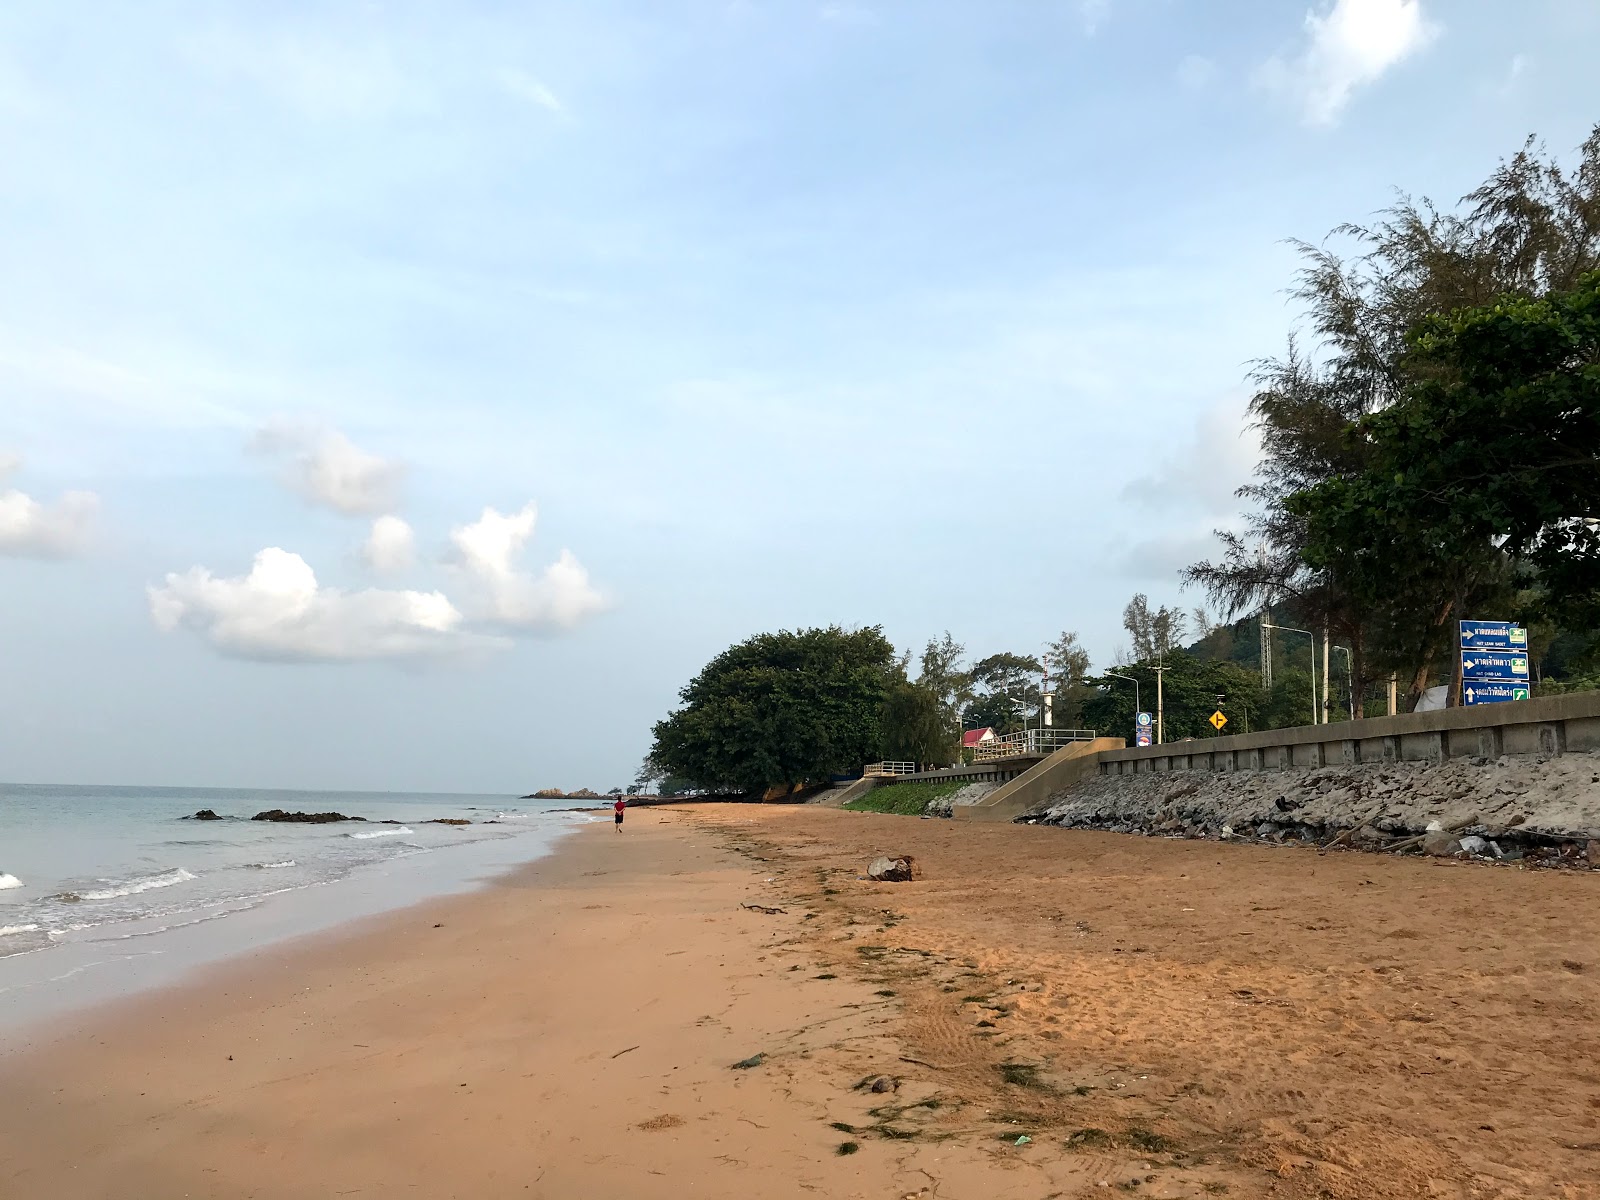 Foto de Kung Wiman Beach - lugar popular entre os apreciadores de relaxamento